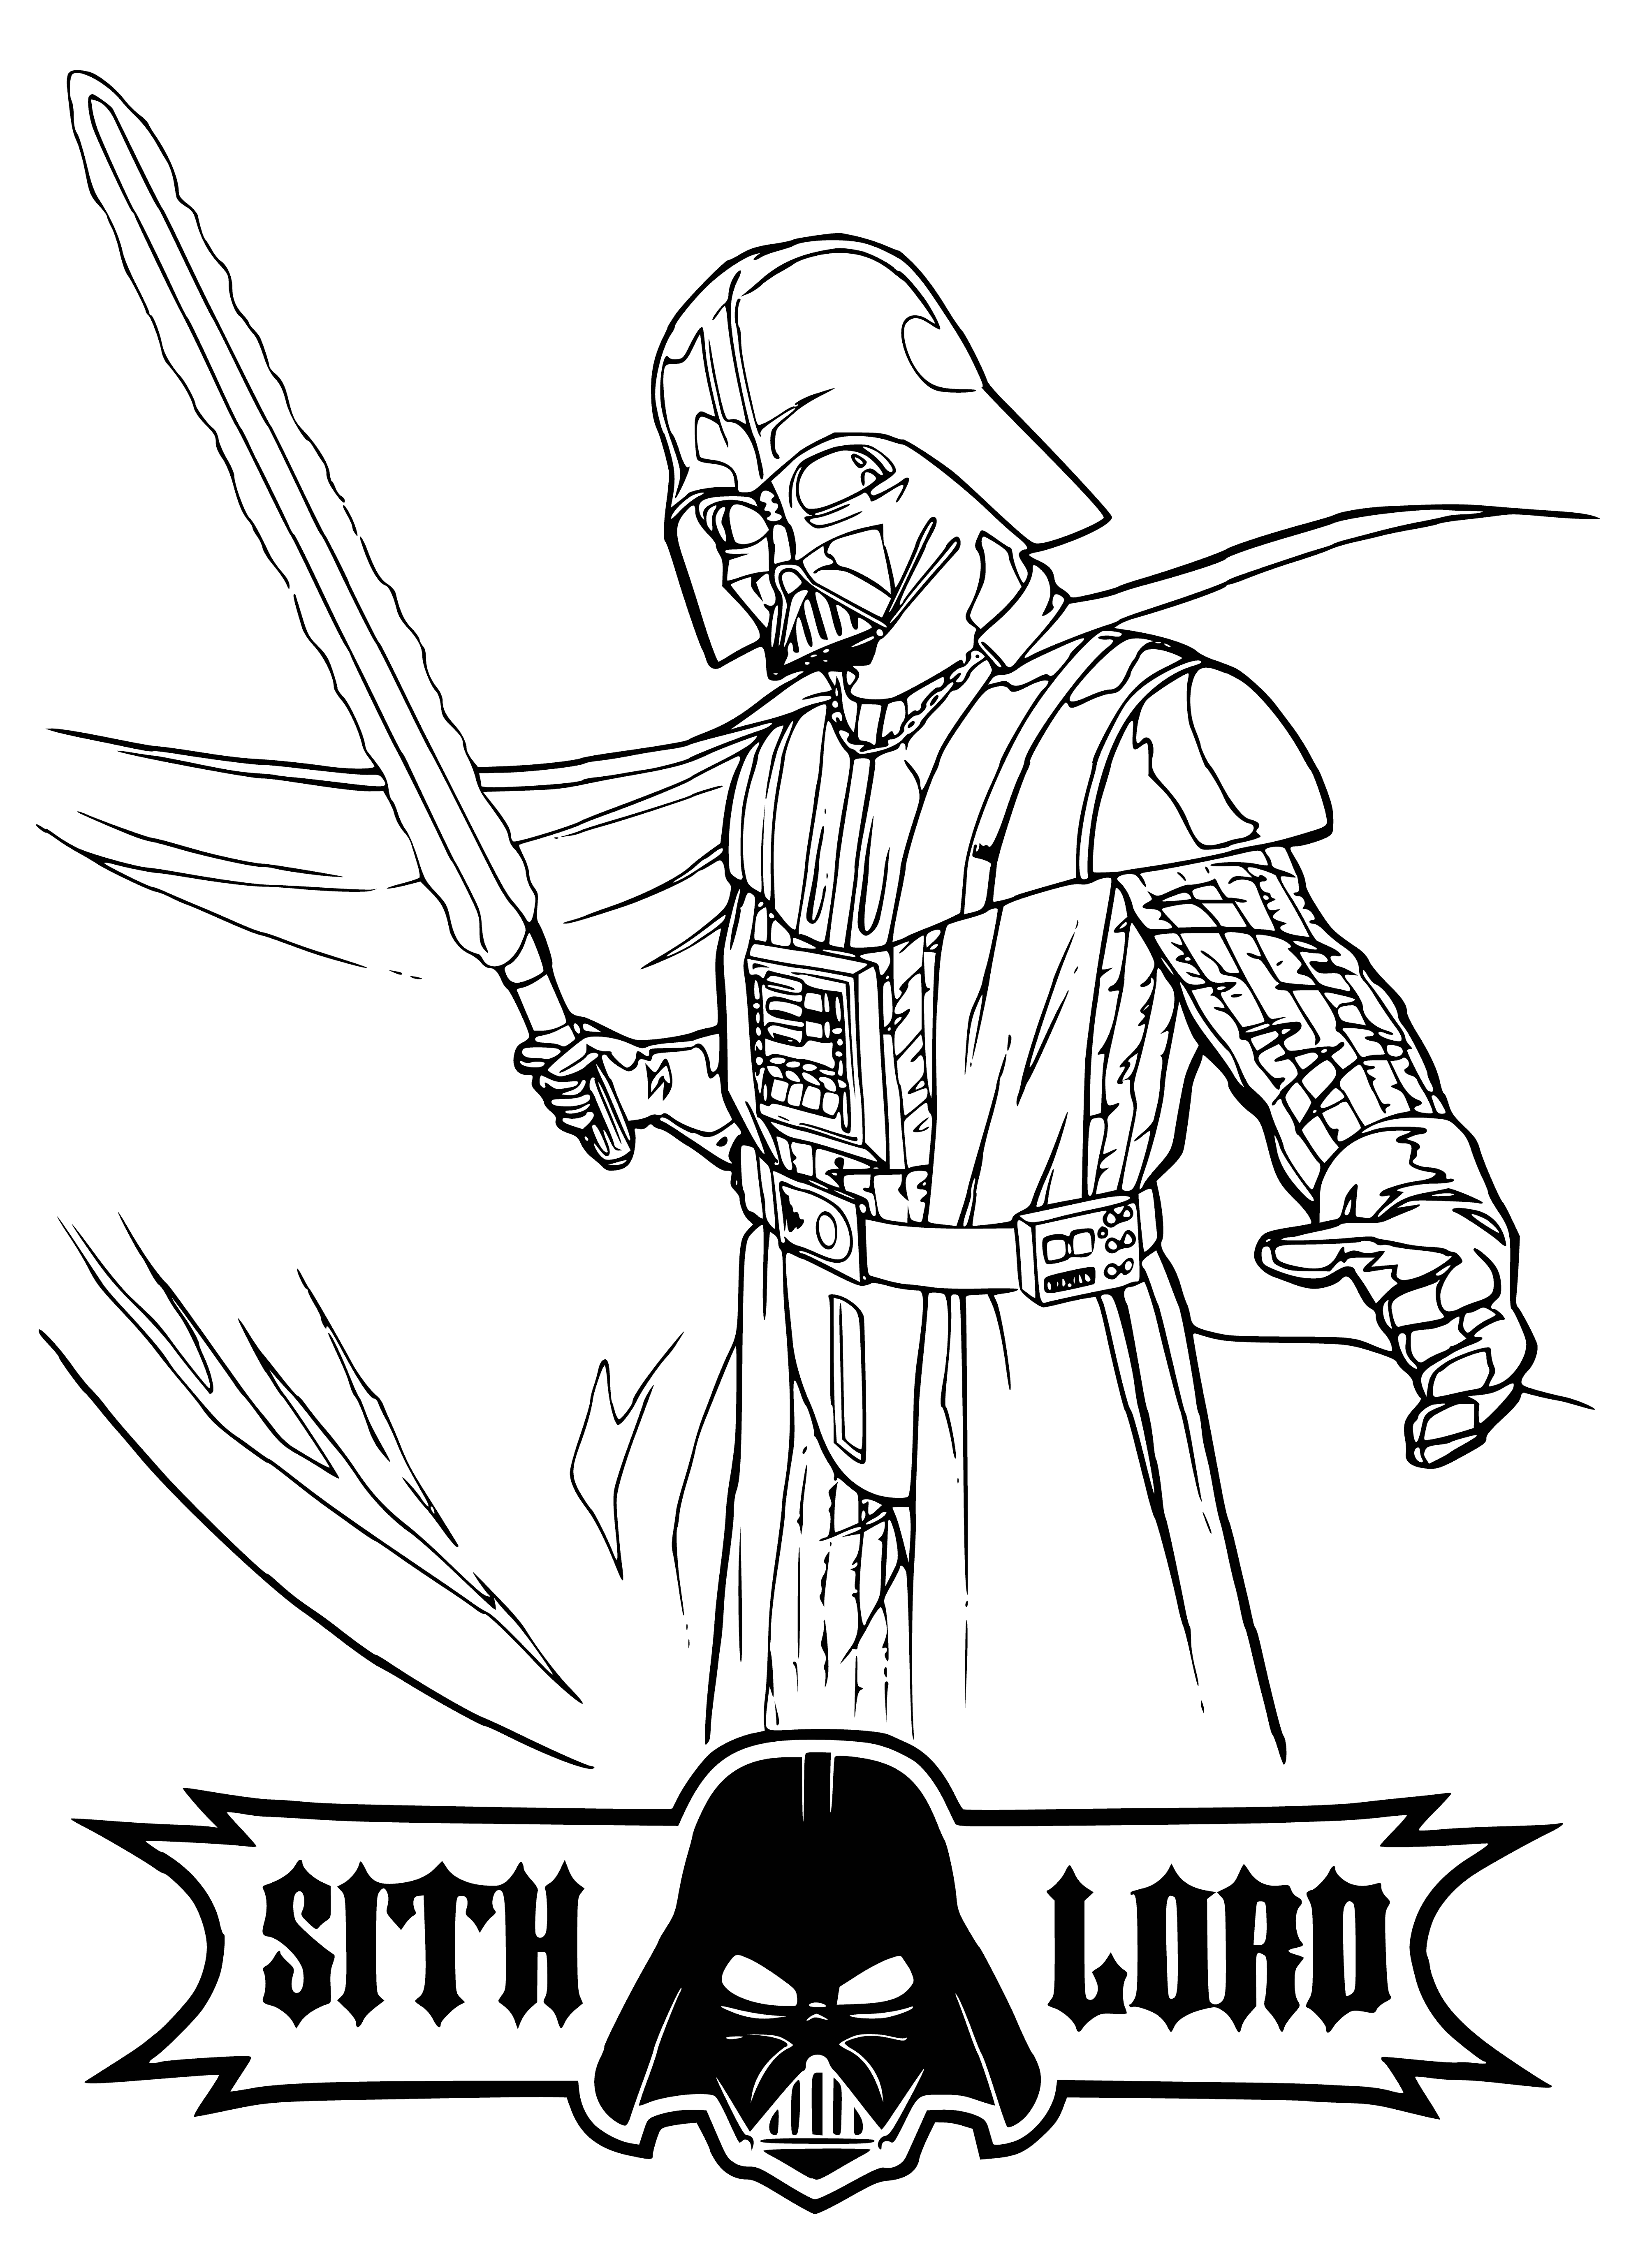 Sith Lord Darth Vader coloring page